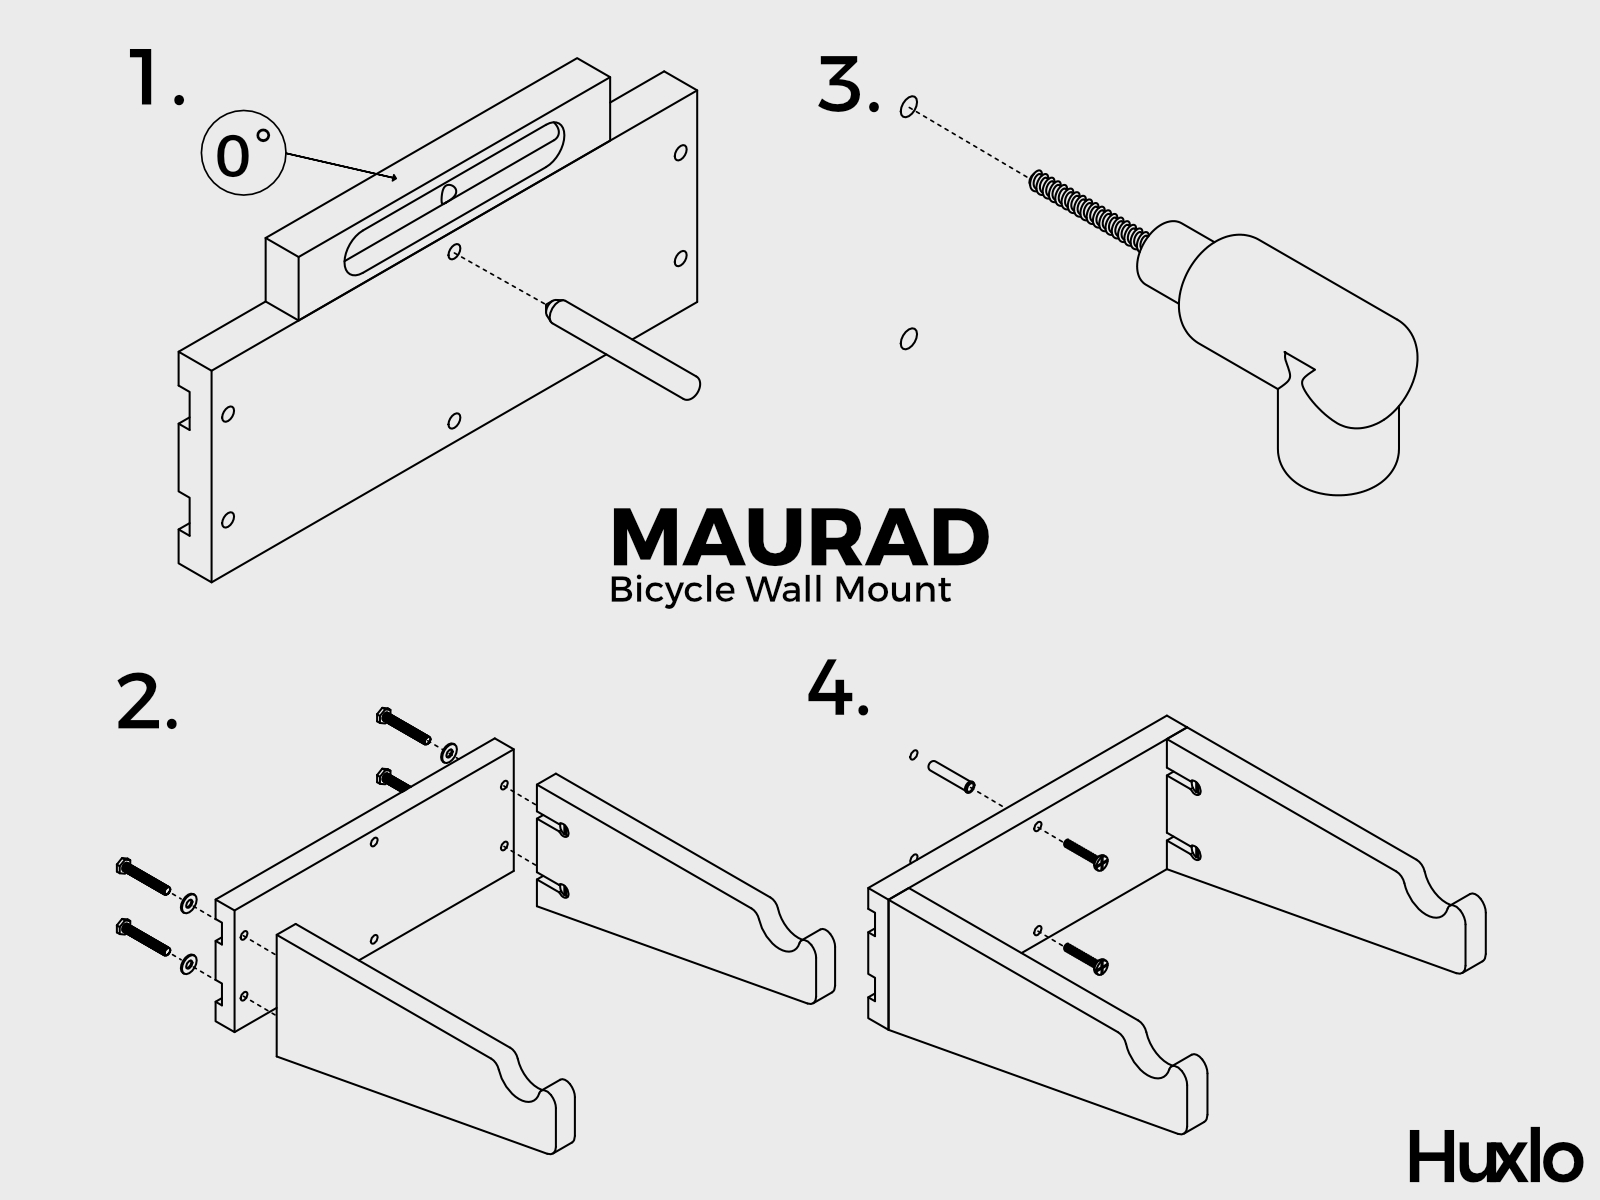 Maurad Instructions